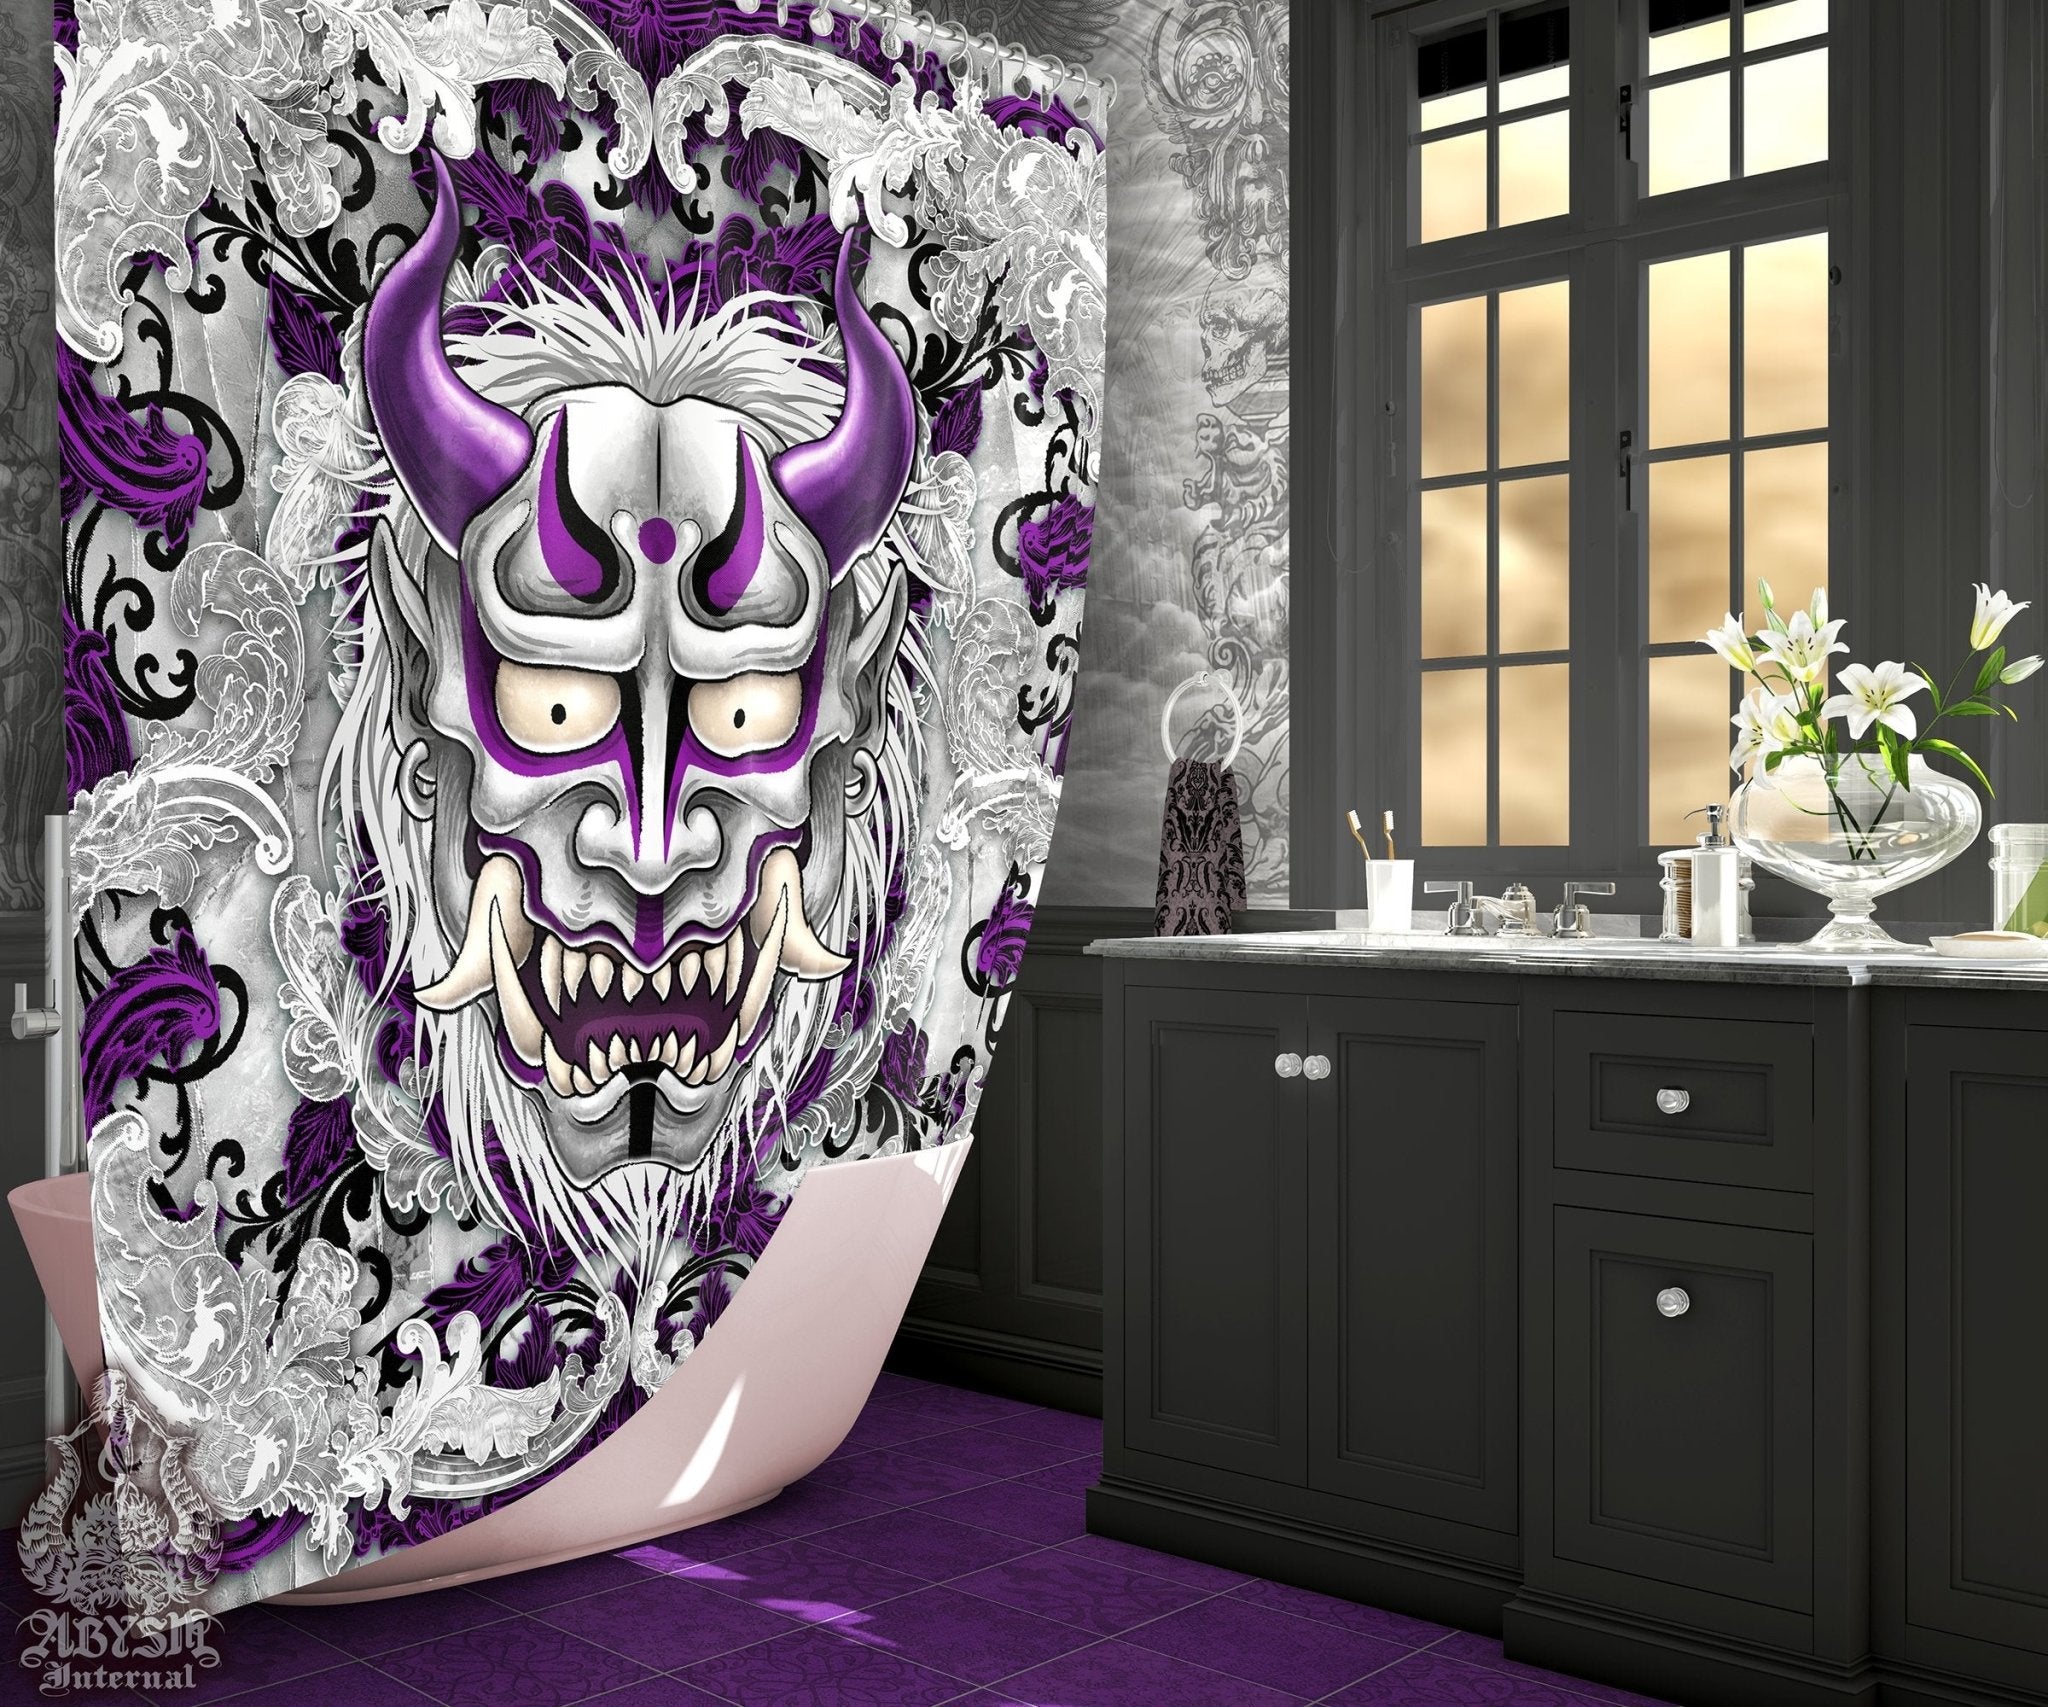 Oni Shower Curtain, Anime, Gothic Bathroom Decor, Purple & White Goth, Japanese Demon - Abysm Internal